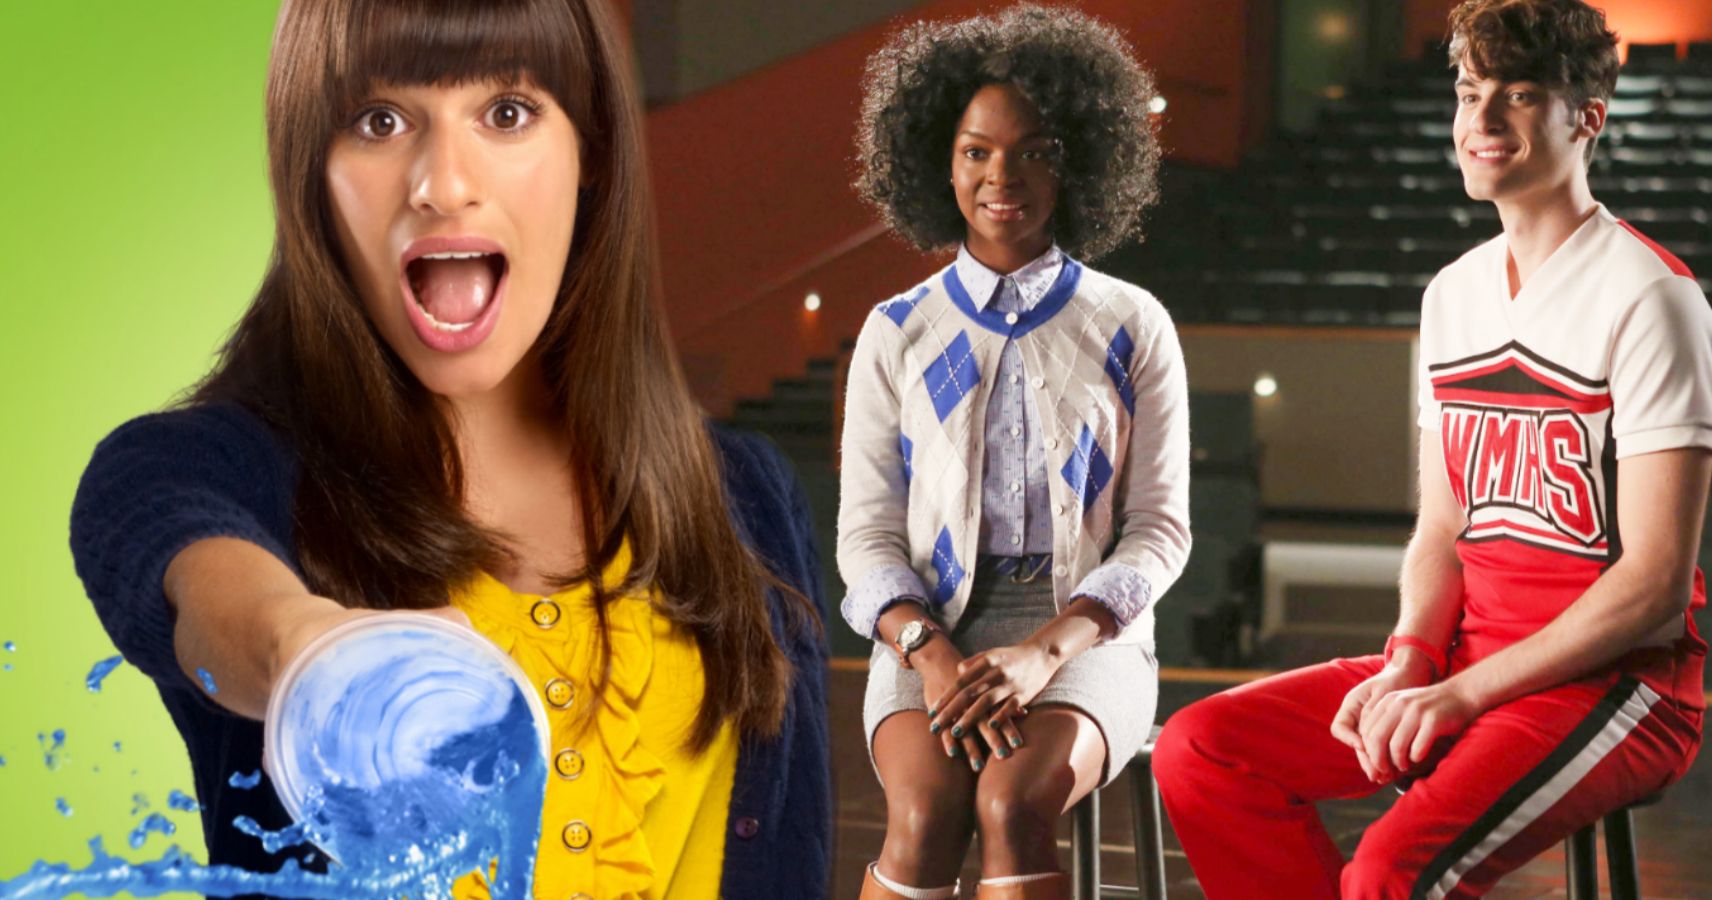 Glee Co-Star Samantha Ware Says Lea Michele Made Life On Set a Living Hell